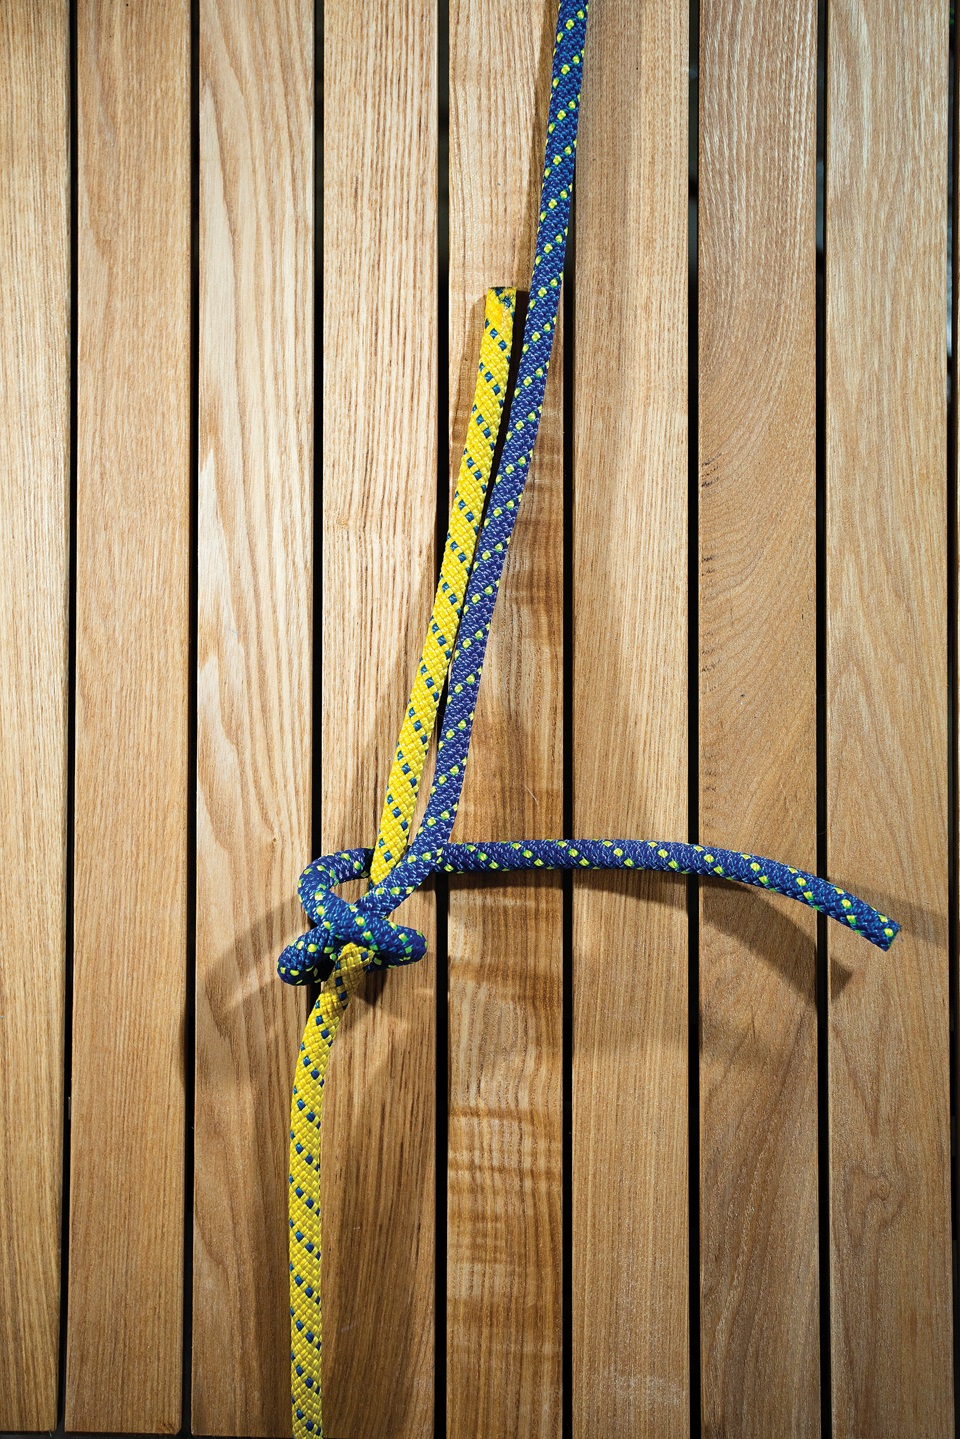 Step 2 먼저 한 로프를 반대쪽 로프에 옭매듭으로 묶는다. 줄을 감아 고리를 만들고 통과시키면 된다.